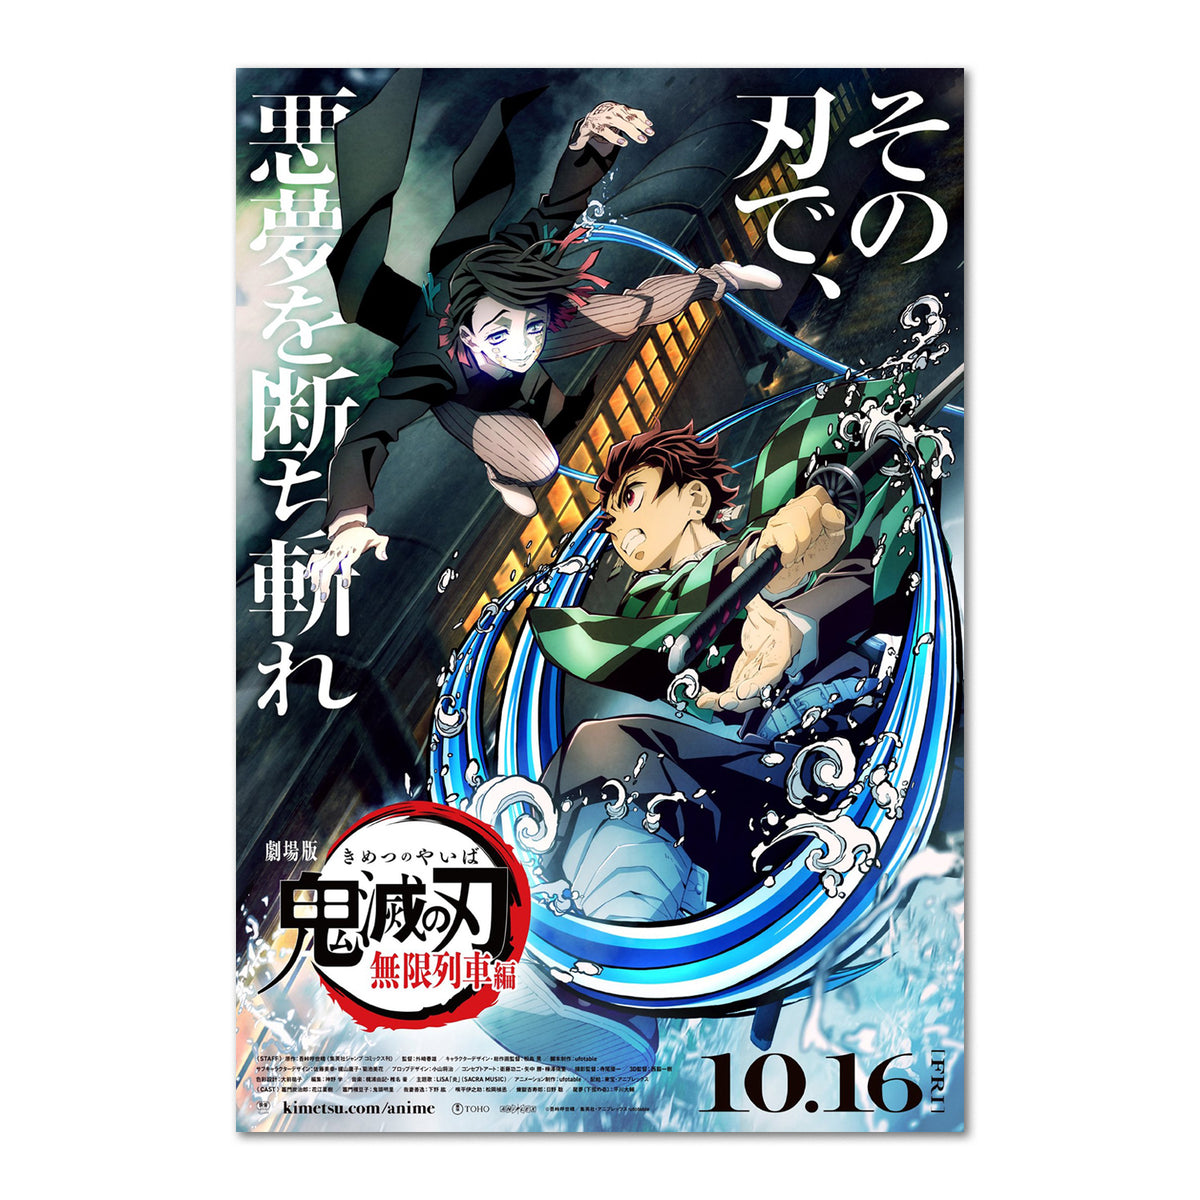 Big Poster Filme Anime Demon Slayer Mugen Train 90x60 cm